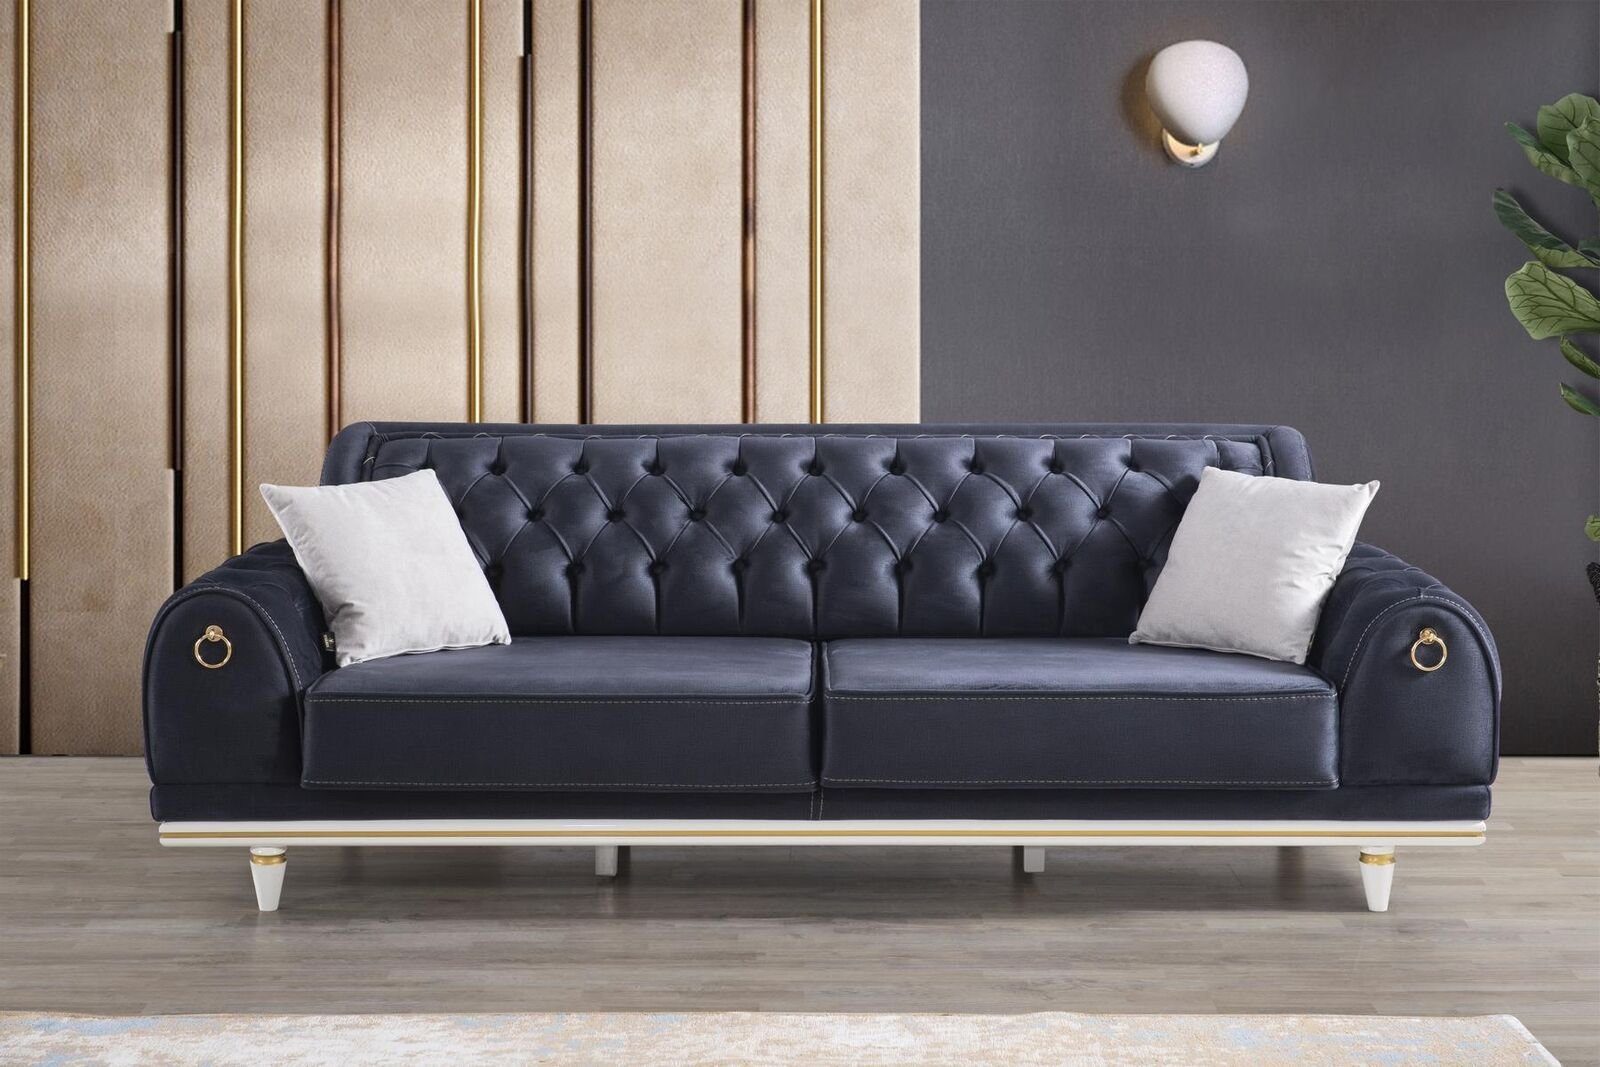 JVmoebel Sofa Chesterfield Sofa Couch 230cm Polster Möbel Einrichtung, Made in Europa